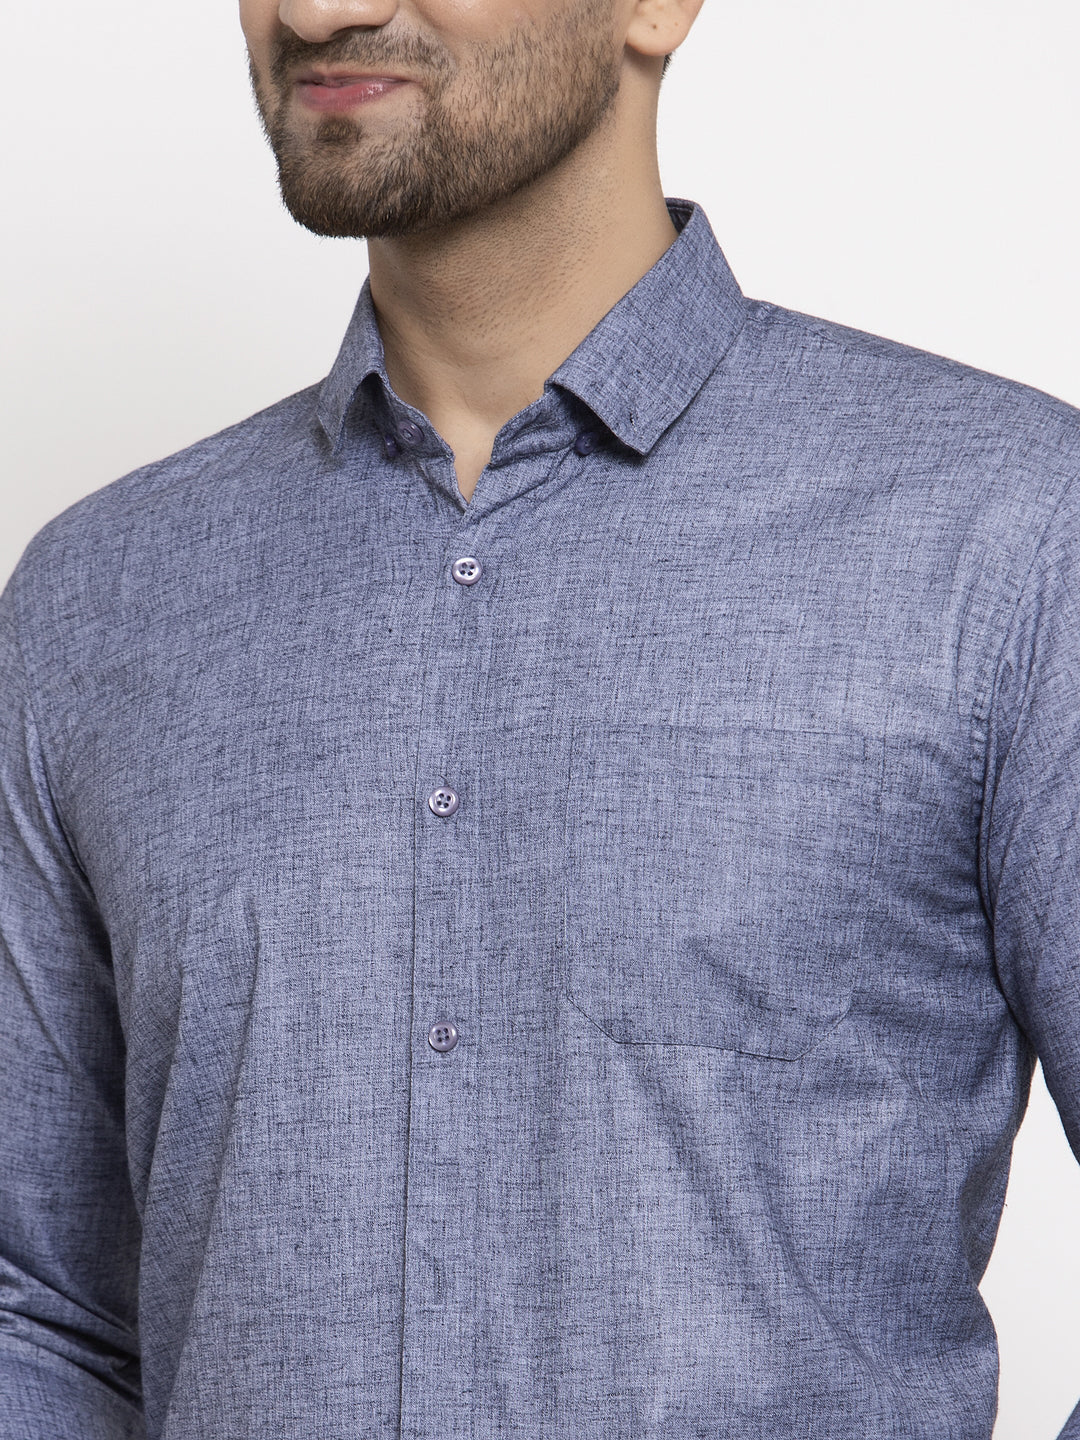 Men's Grey Cotton Solid Button Down Formal Shirts ( SF 753Grey ) - Jainish